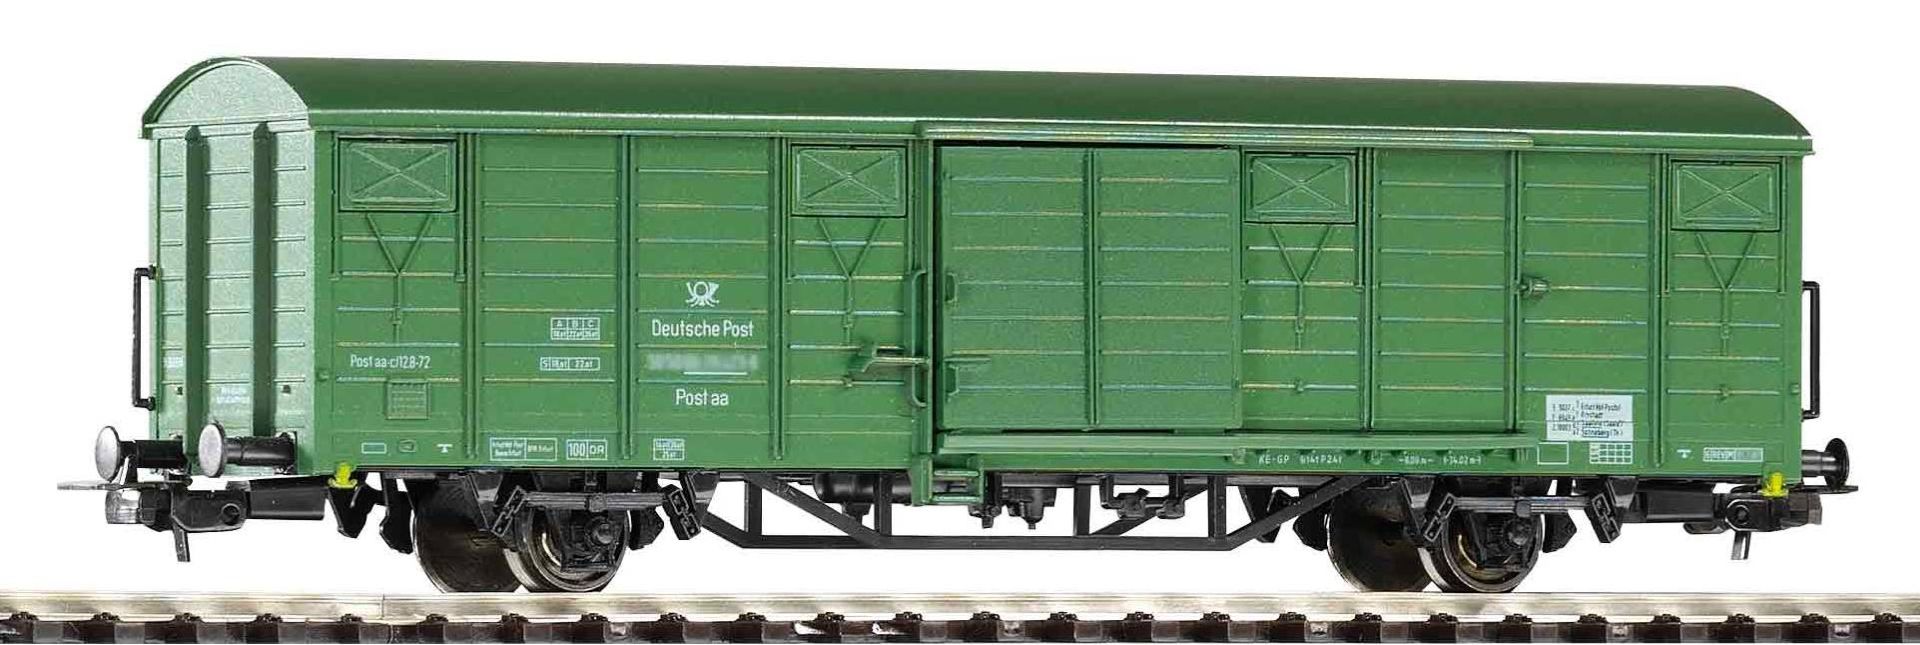 Piko 24504 - Gedeckter Güterwagen Post aa, DR, Ep.IV